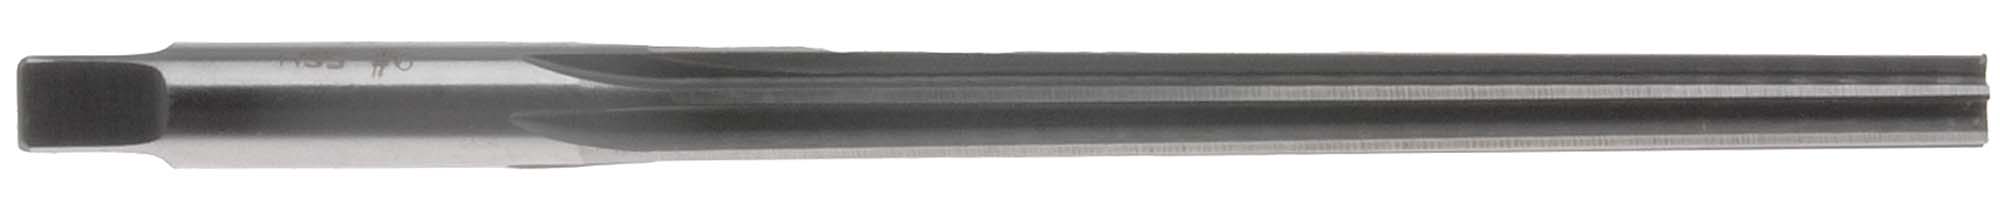 #4/0 Straight Flute Taper Pin Reamer, High Speed Steel